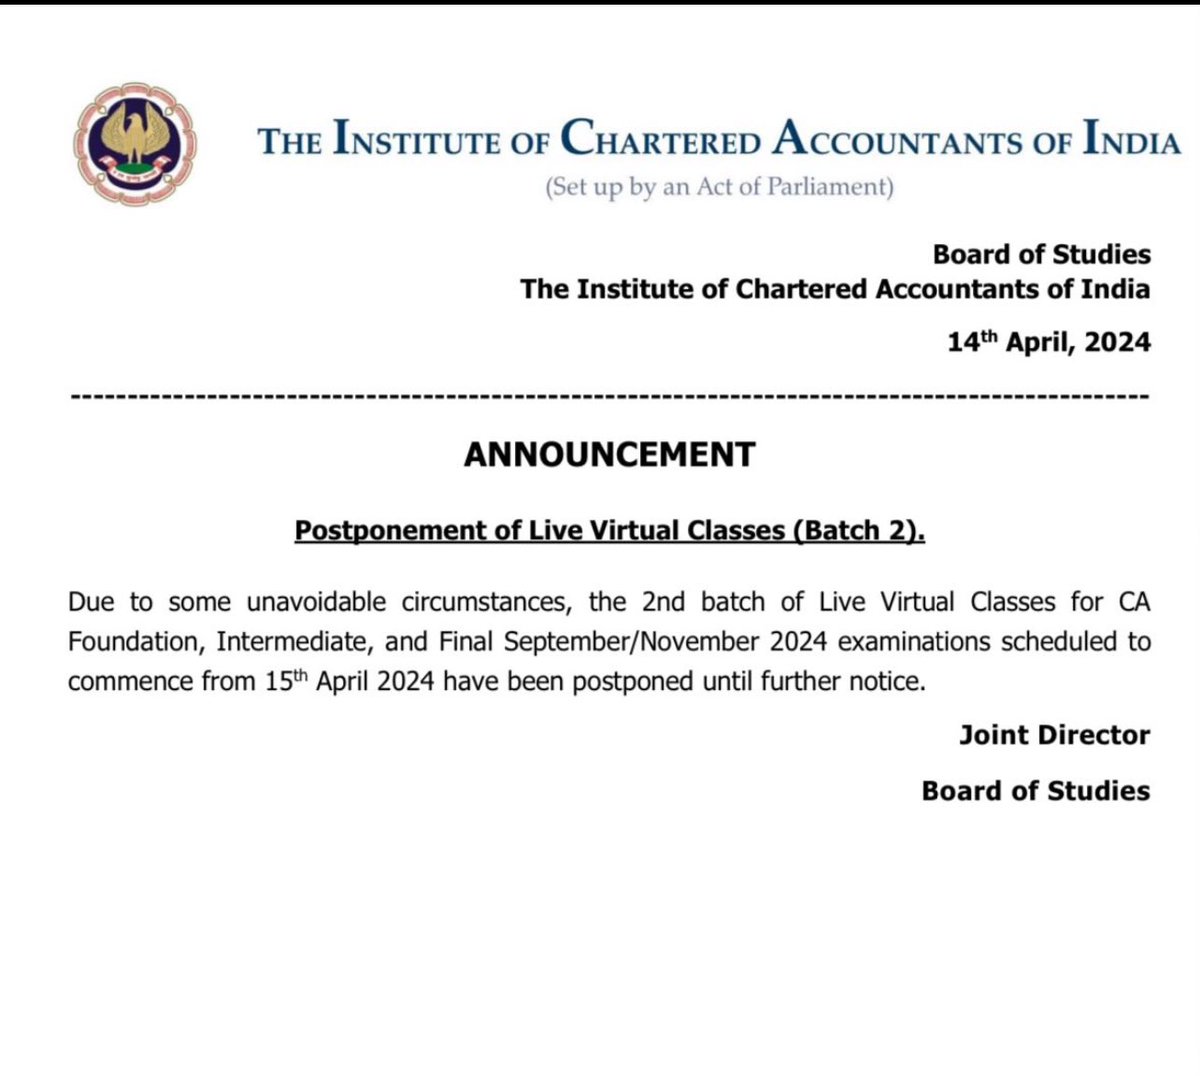 Seem like ca exam May’24 postponed news on its way also #caexam #icai #ca #castudents